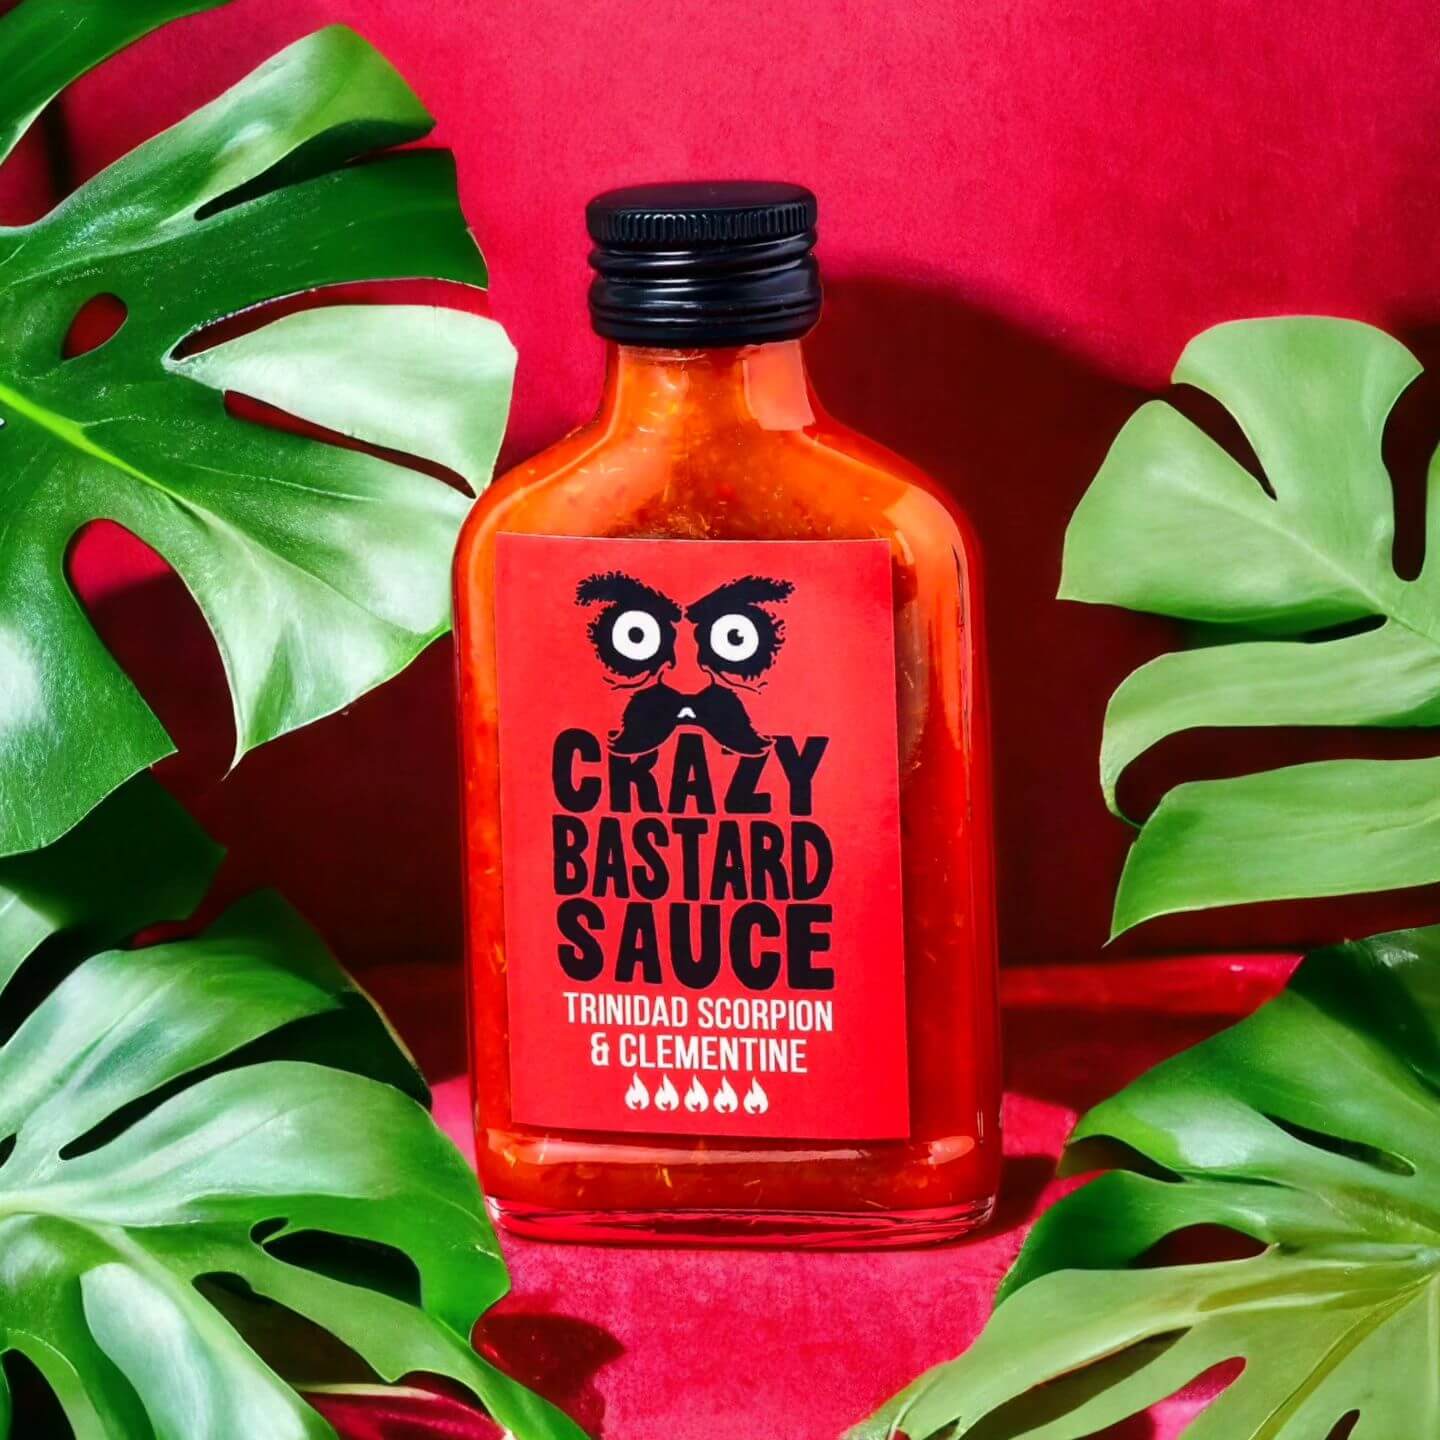 Trinidad Scorpion & Clementine Hot Sauce image